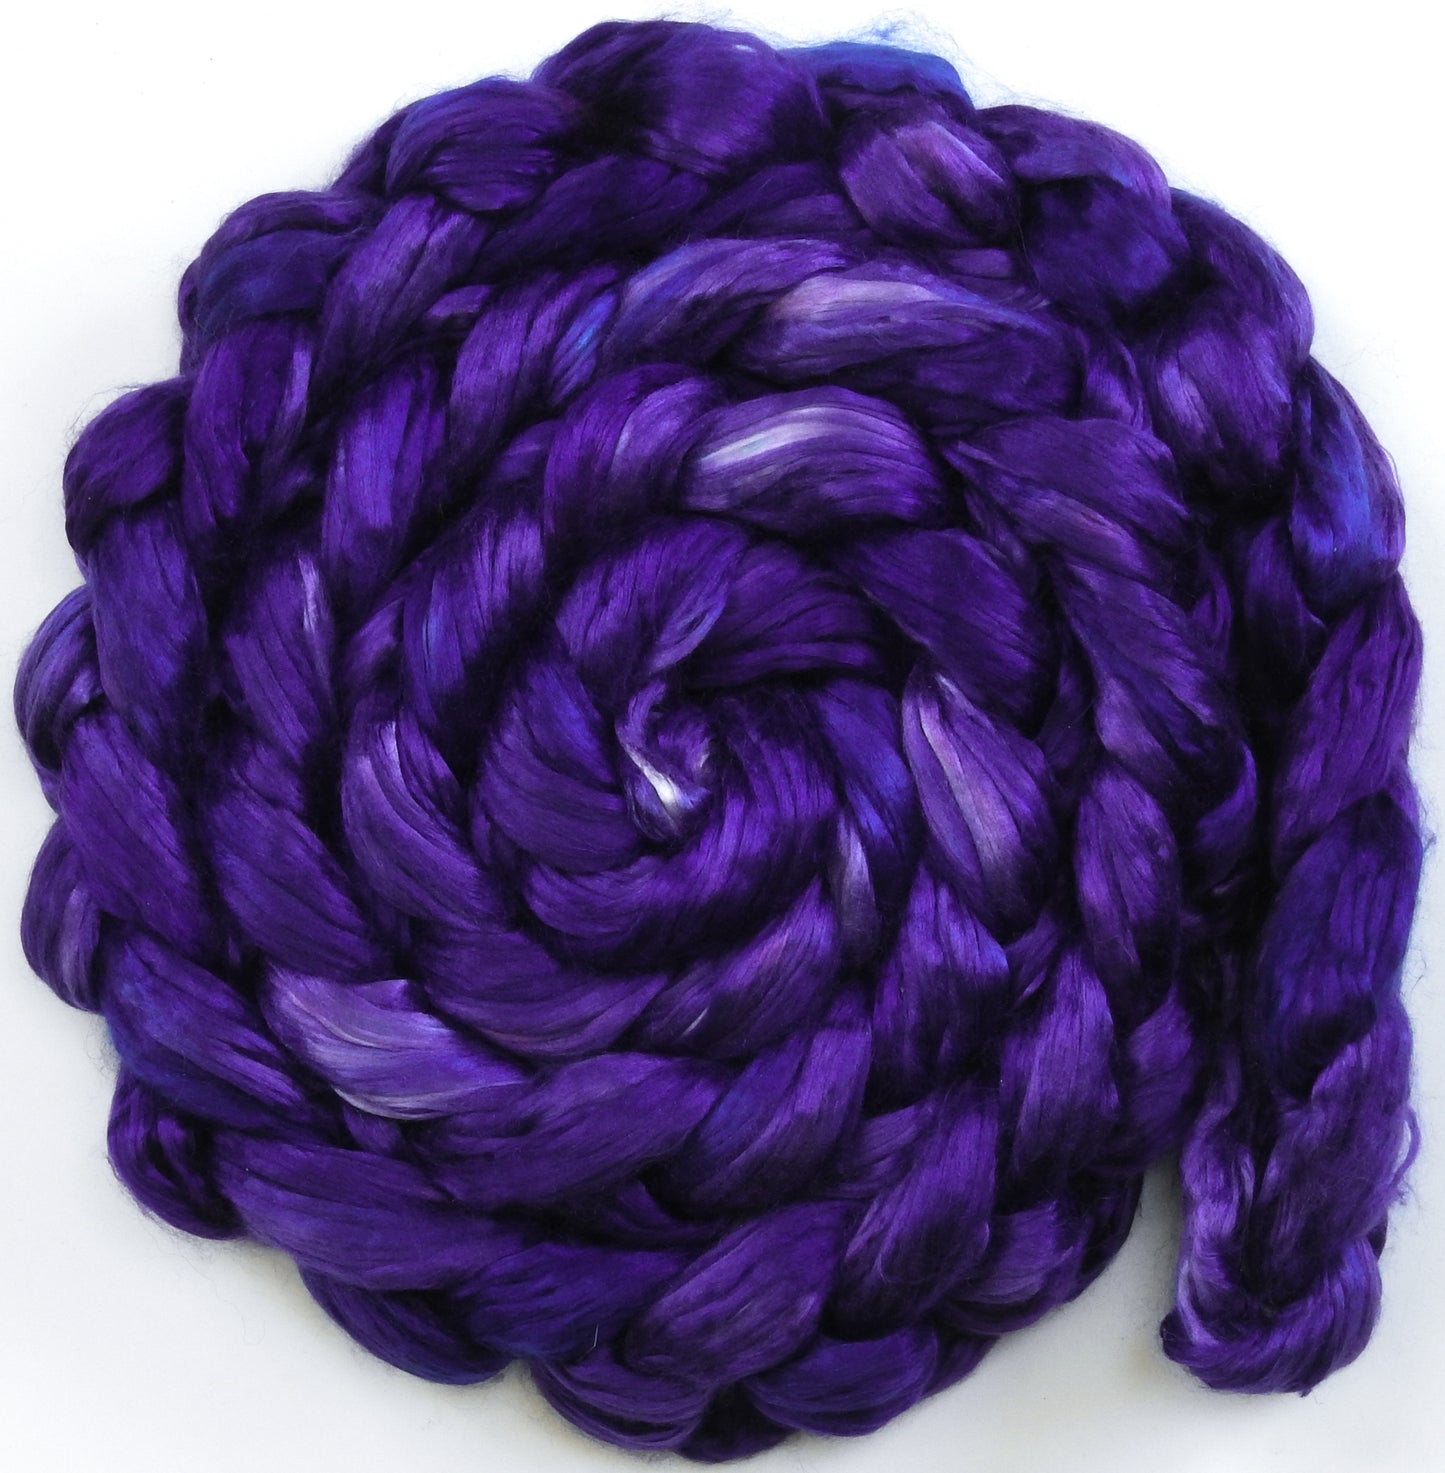 Violet Anemone - (4.2 oz)100% Mulberry Silk